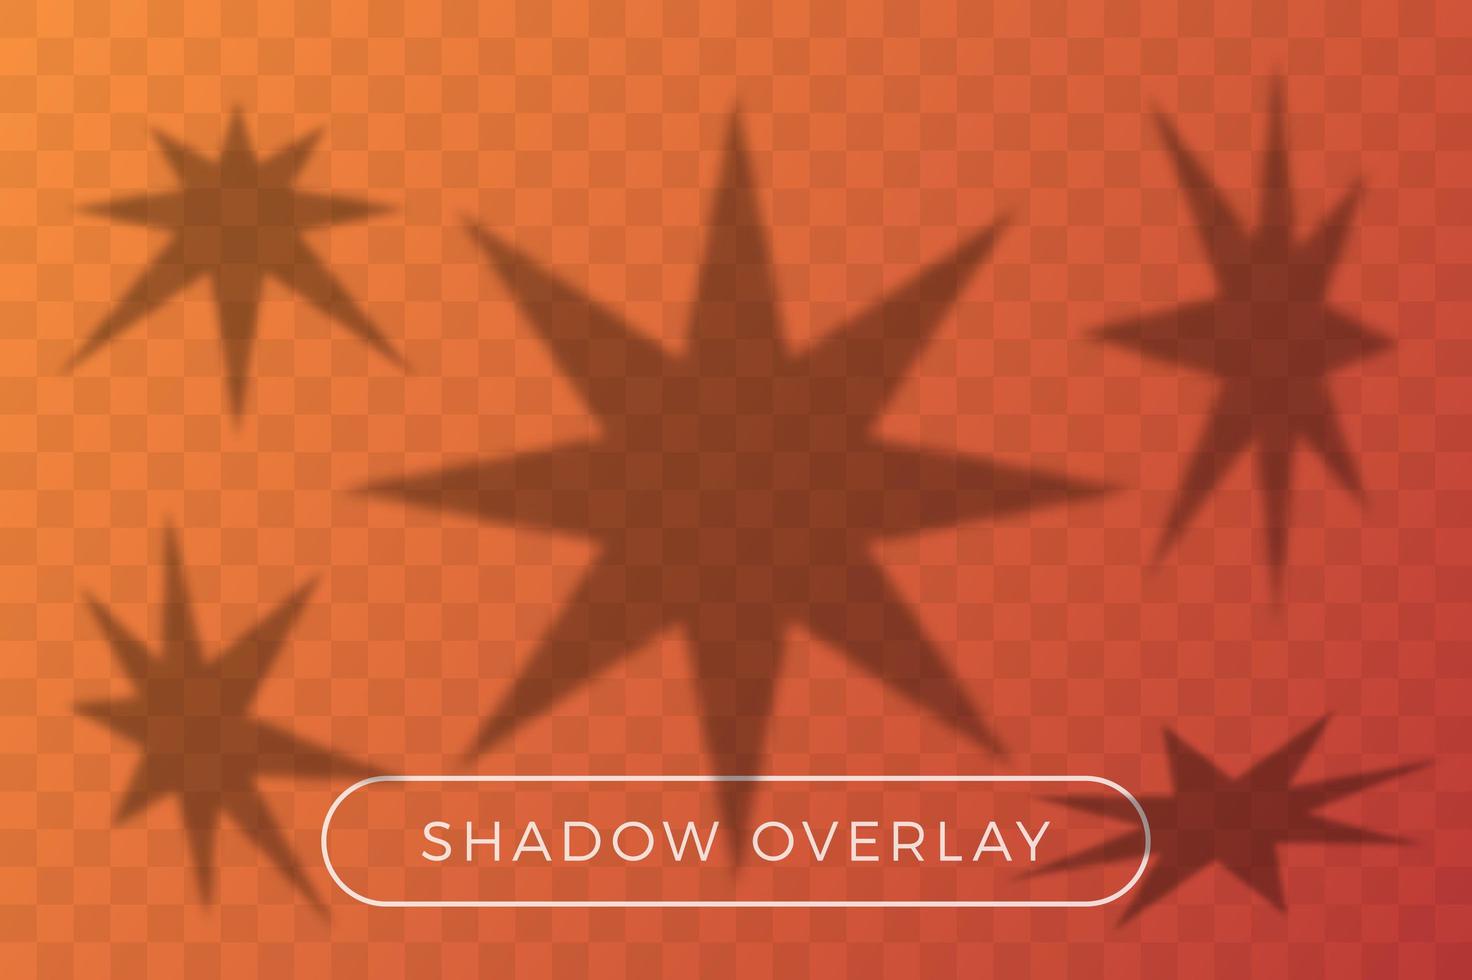 Shadow overlay star set vector